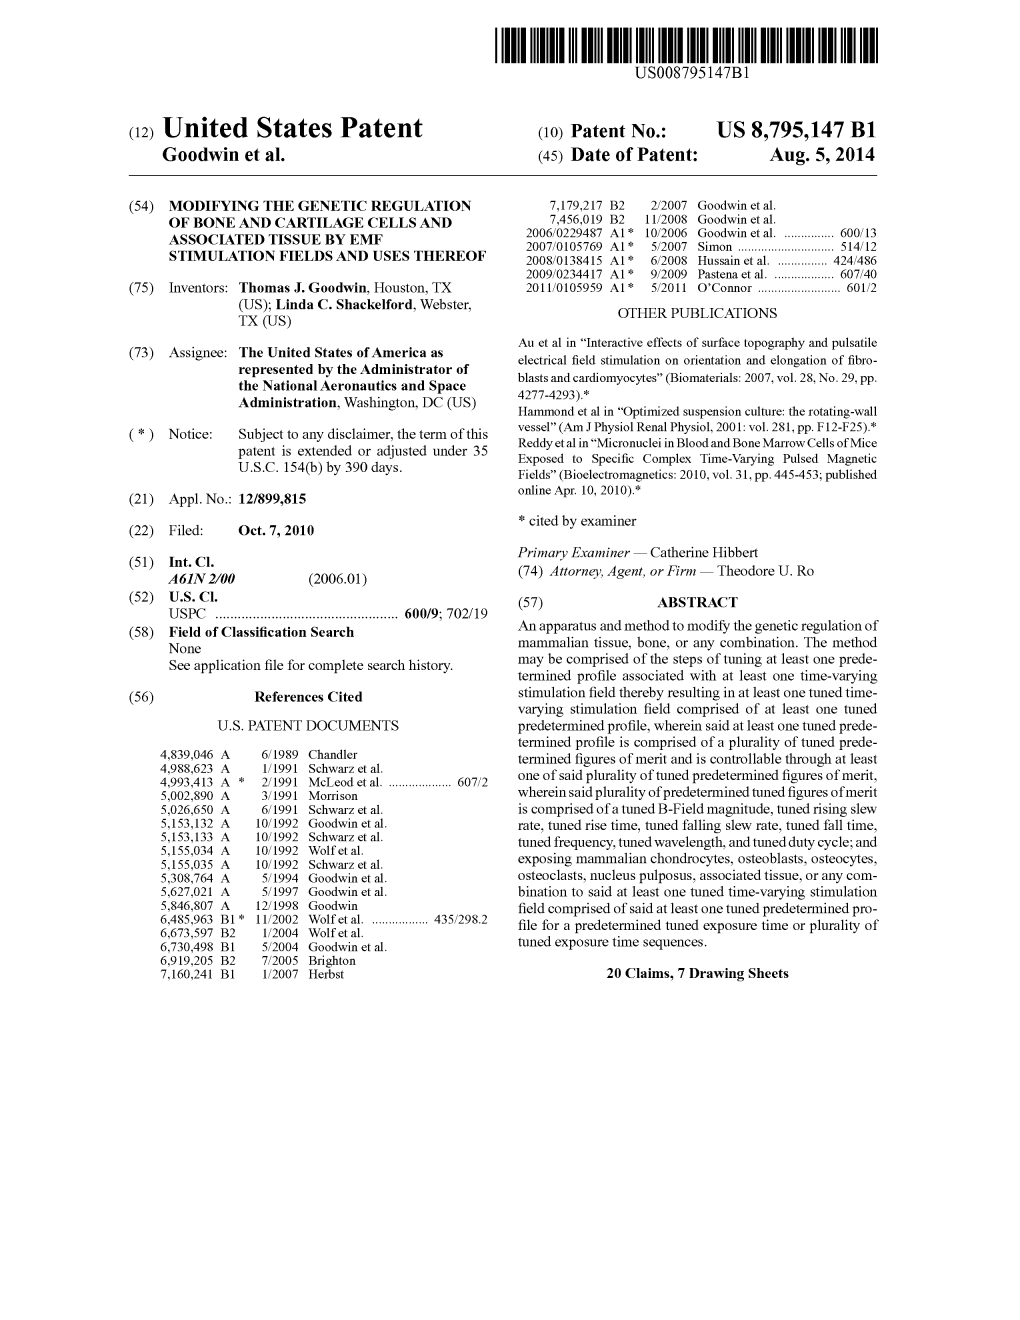 (12) United States Patent (Lo) Patent No.: �US 8,795,147 B1 Goodwin Et Al